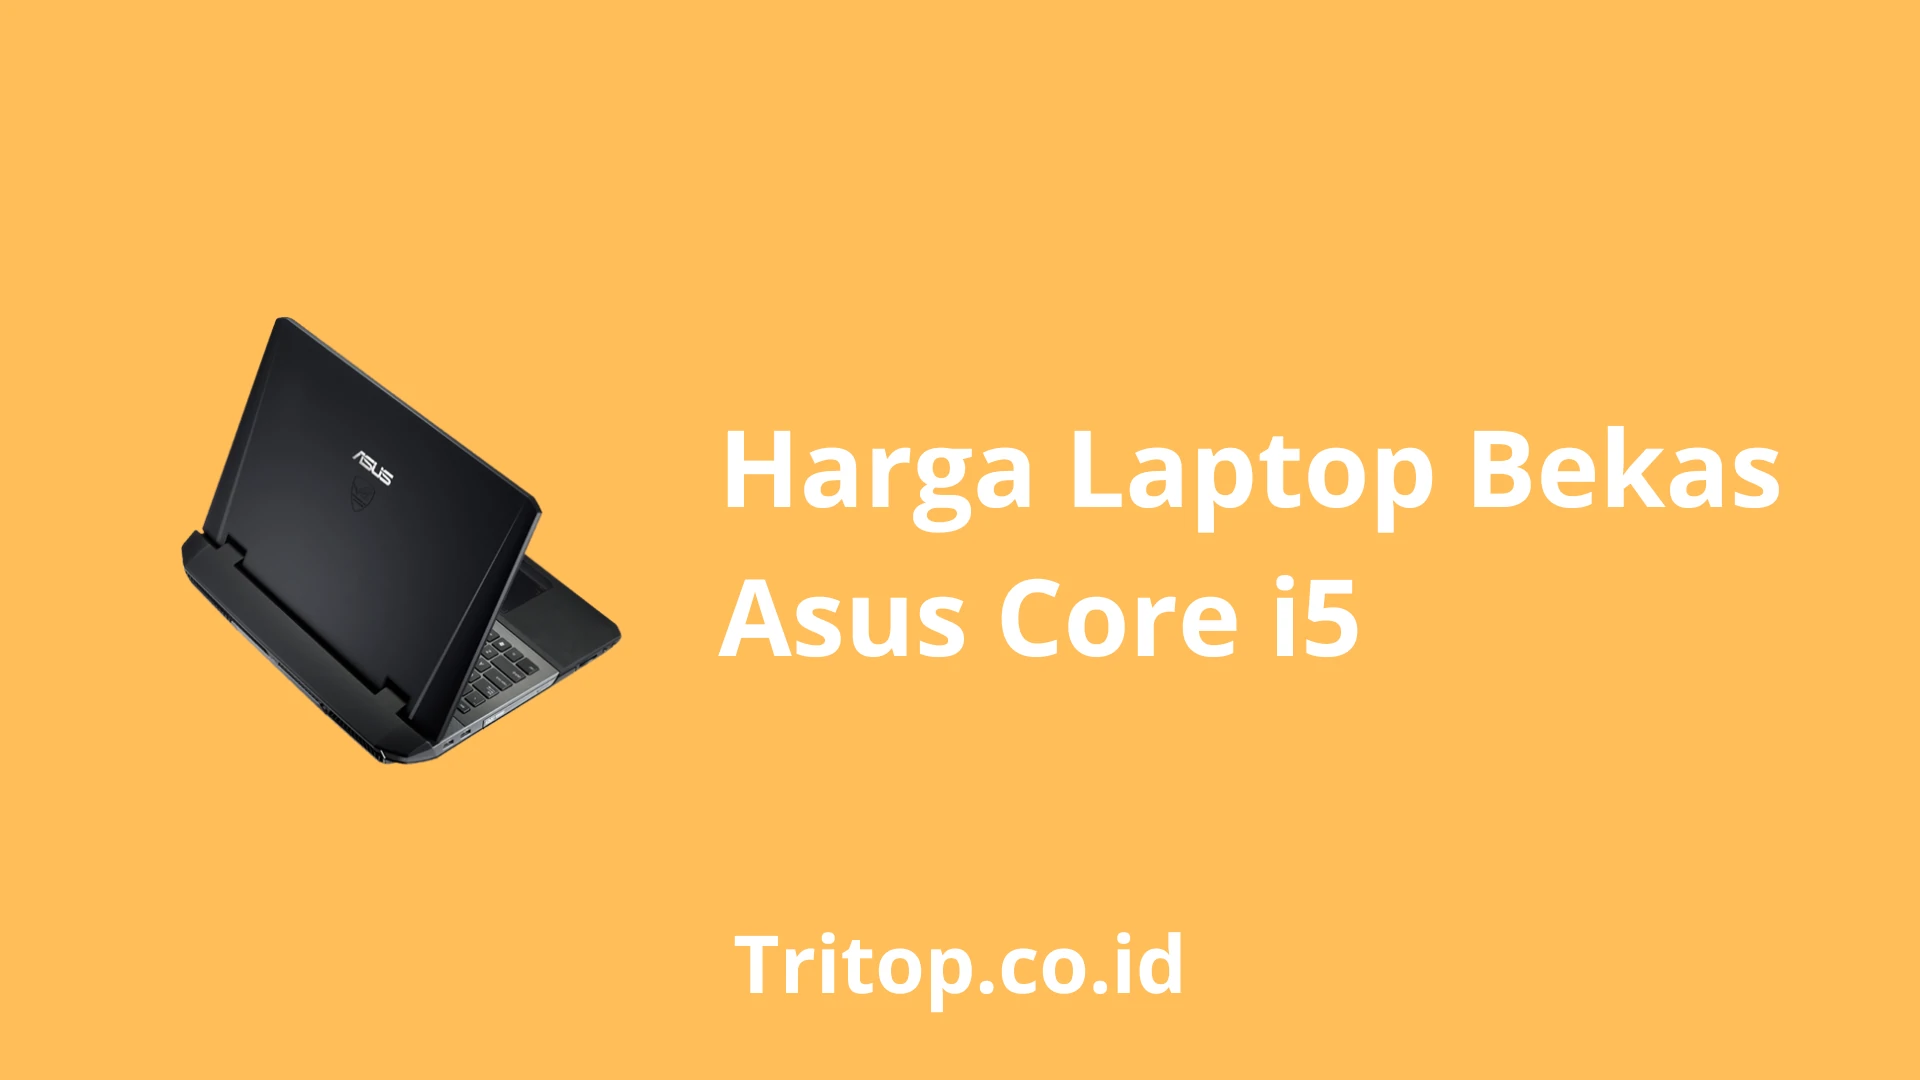 Harga Laptop Bekas Asus Core i5 Tritop.co.id